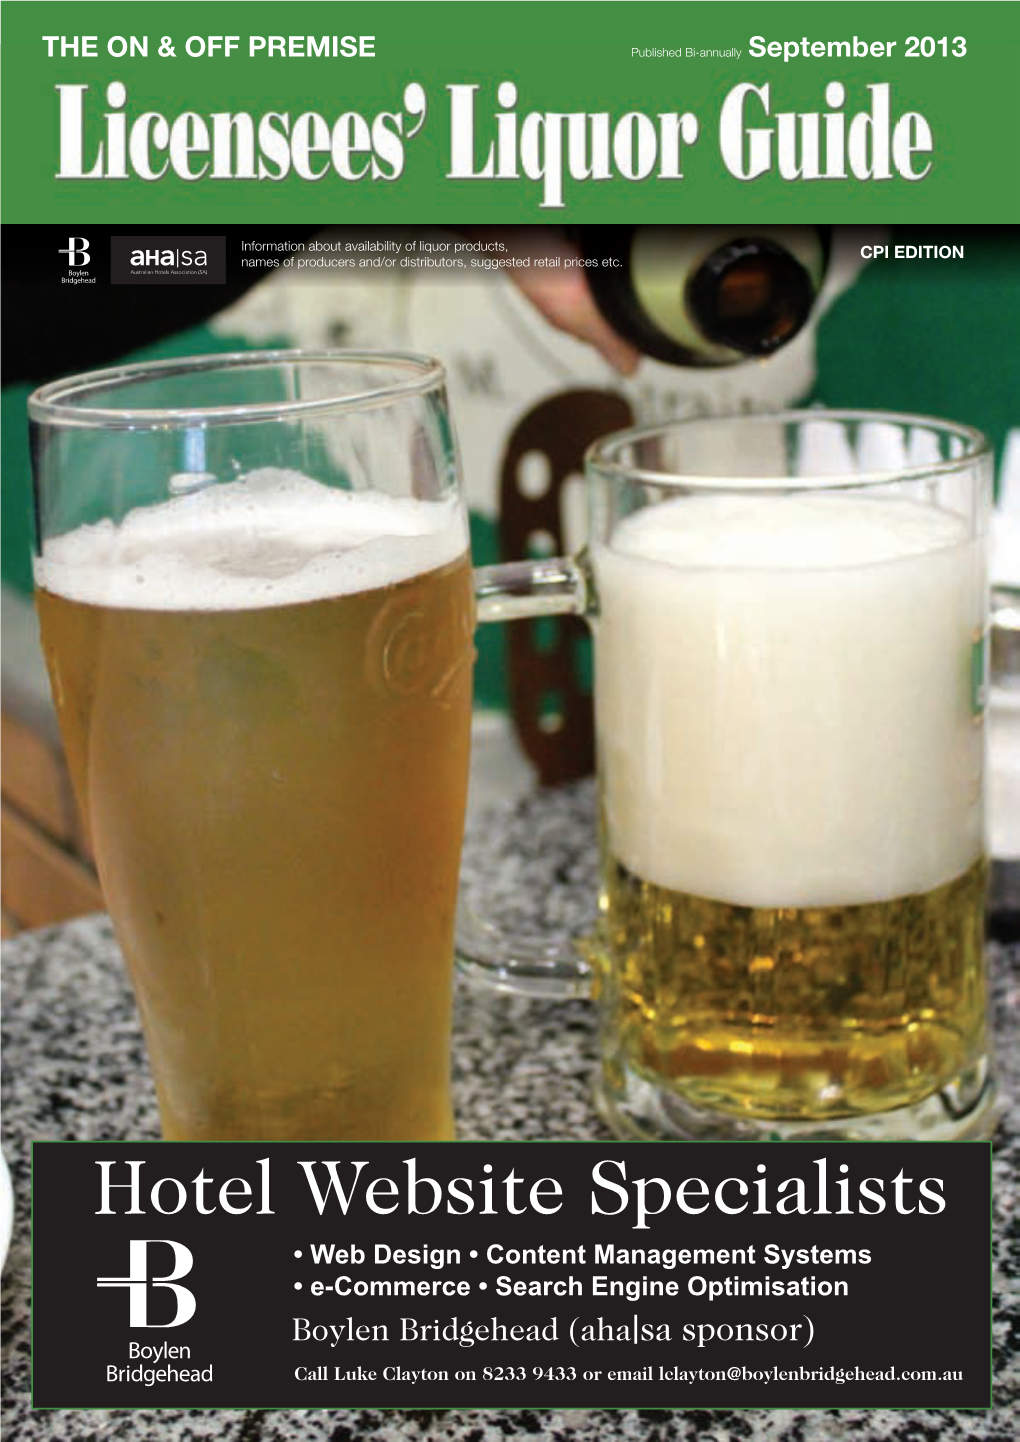 Hotel Website Specialists